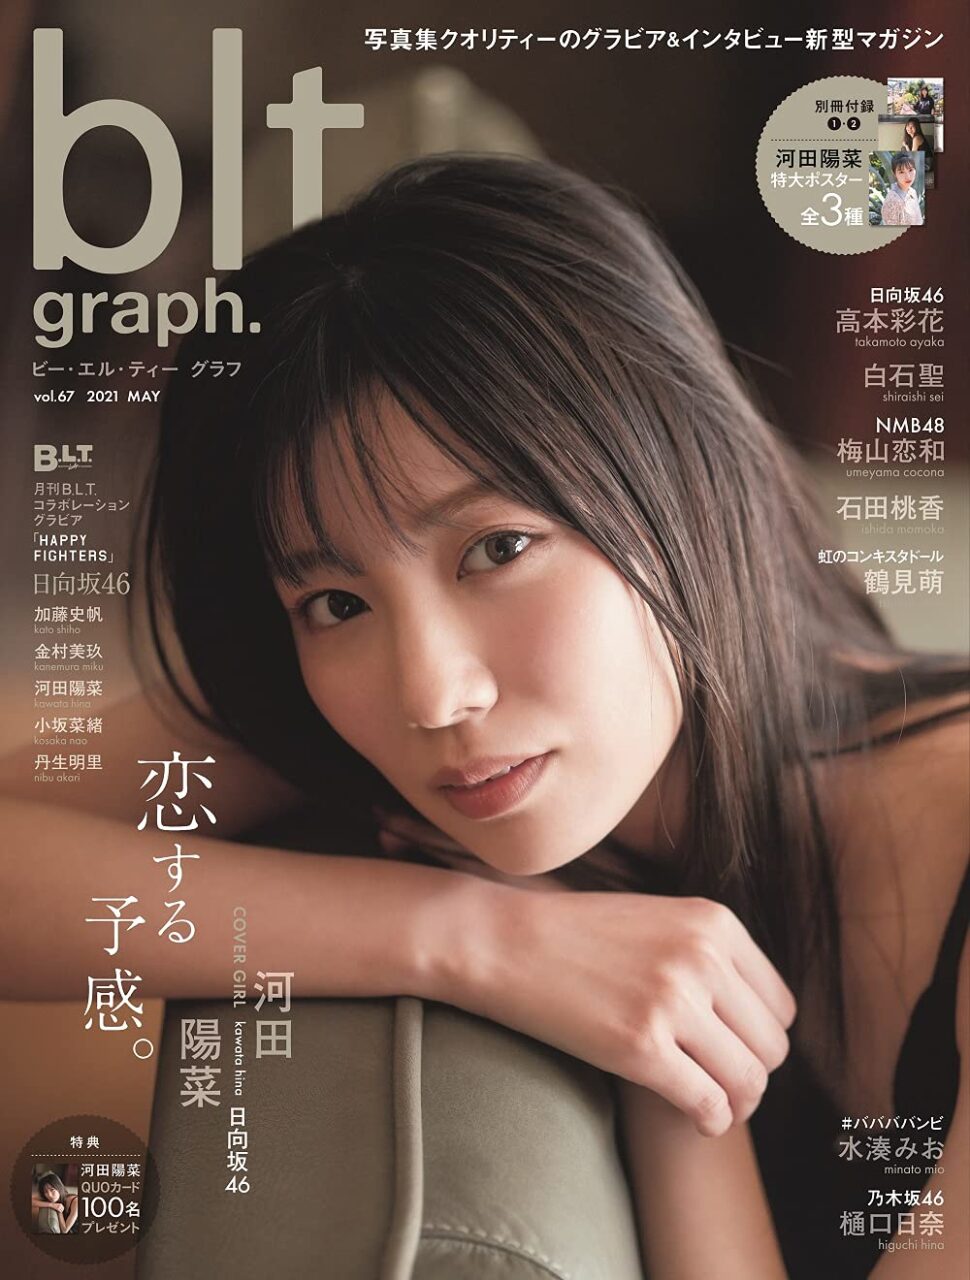 NMB48 梅山恋和、グラビア掲載！「blt graph. vol.67」本日5/19発売！